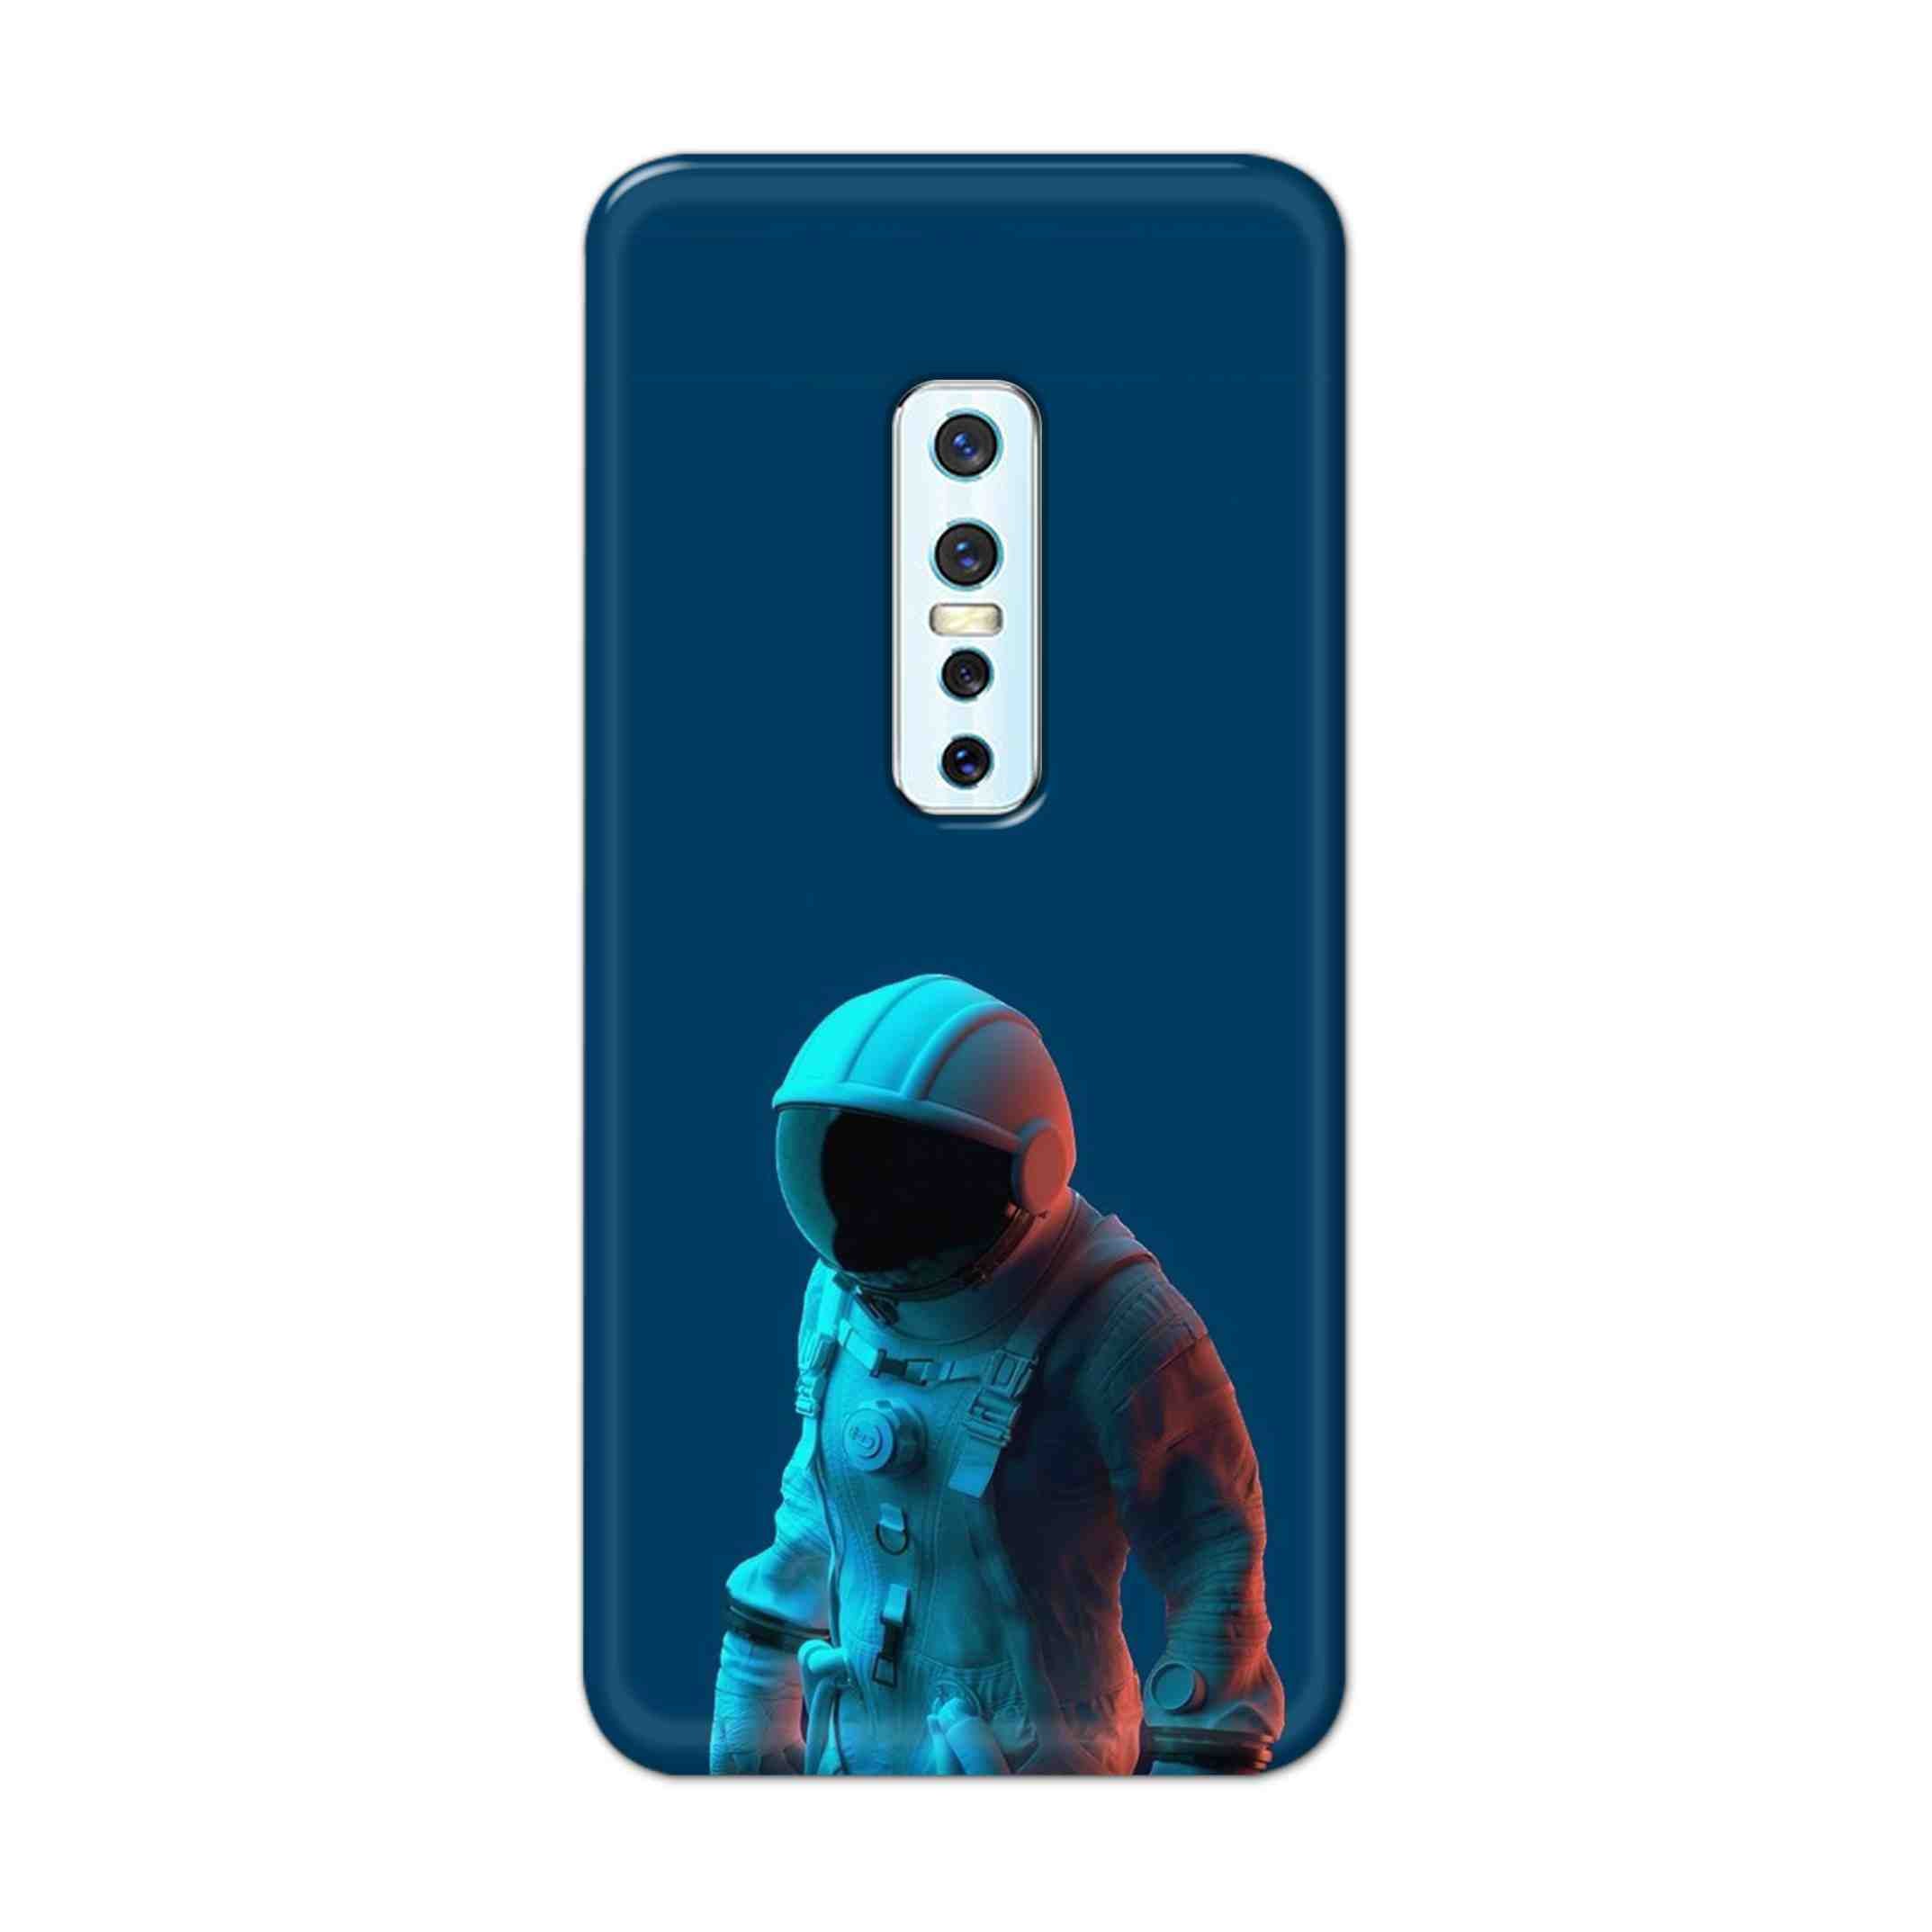 Buy Blue Astronaut Hard Back Mobile Phone Case Cover For Vivo V17 Pro Online